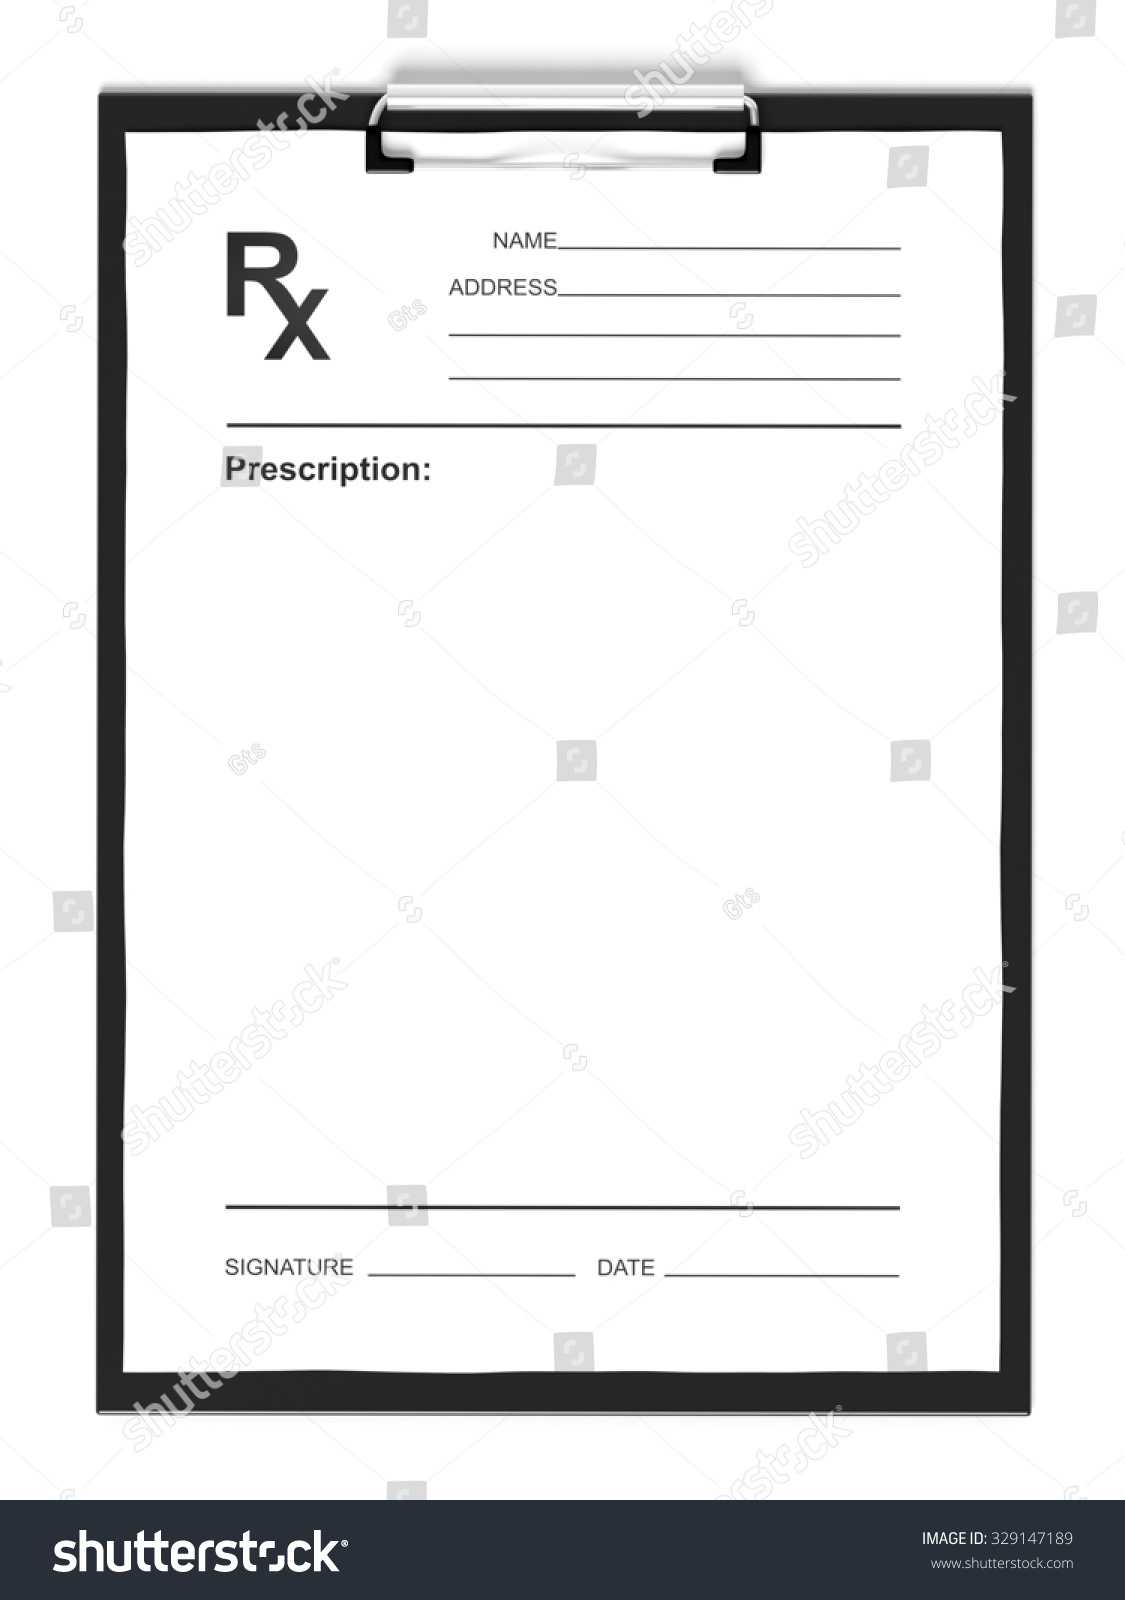 26 Images Of Blank Prescription Form Doctor Template With Regard To Blank Prescription Pad Template